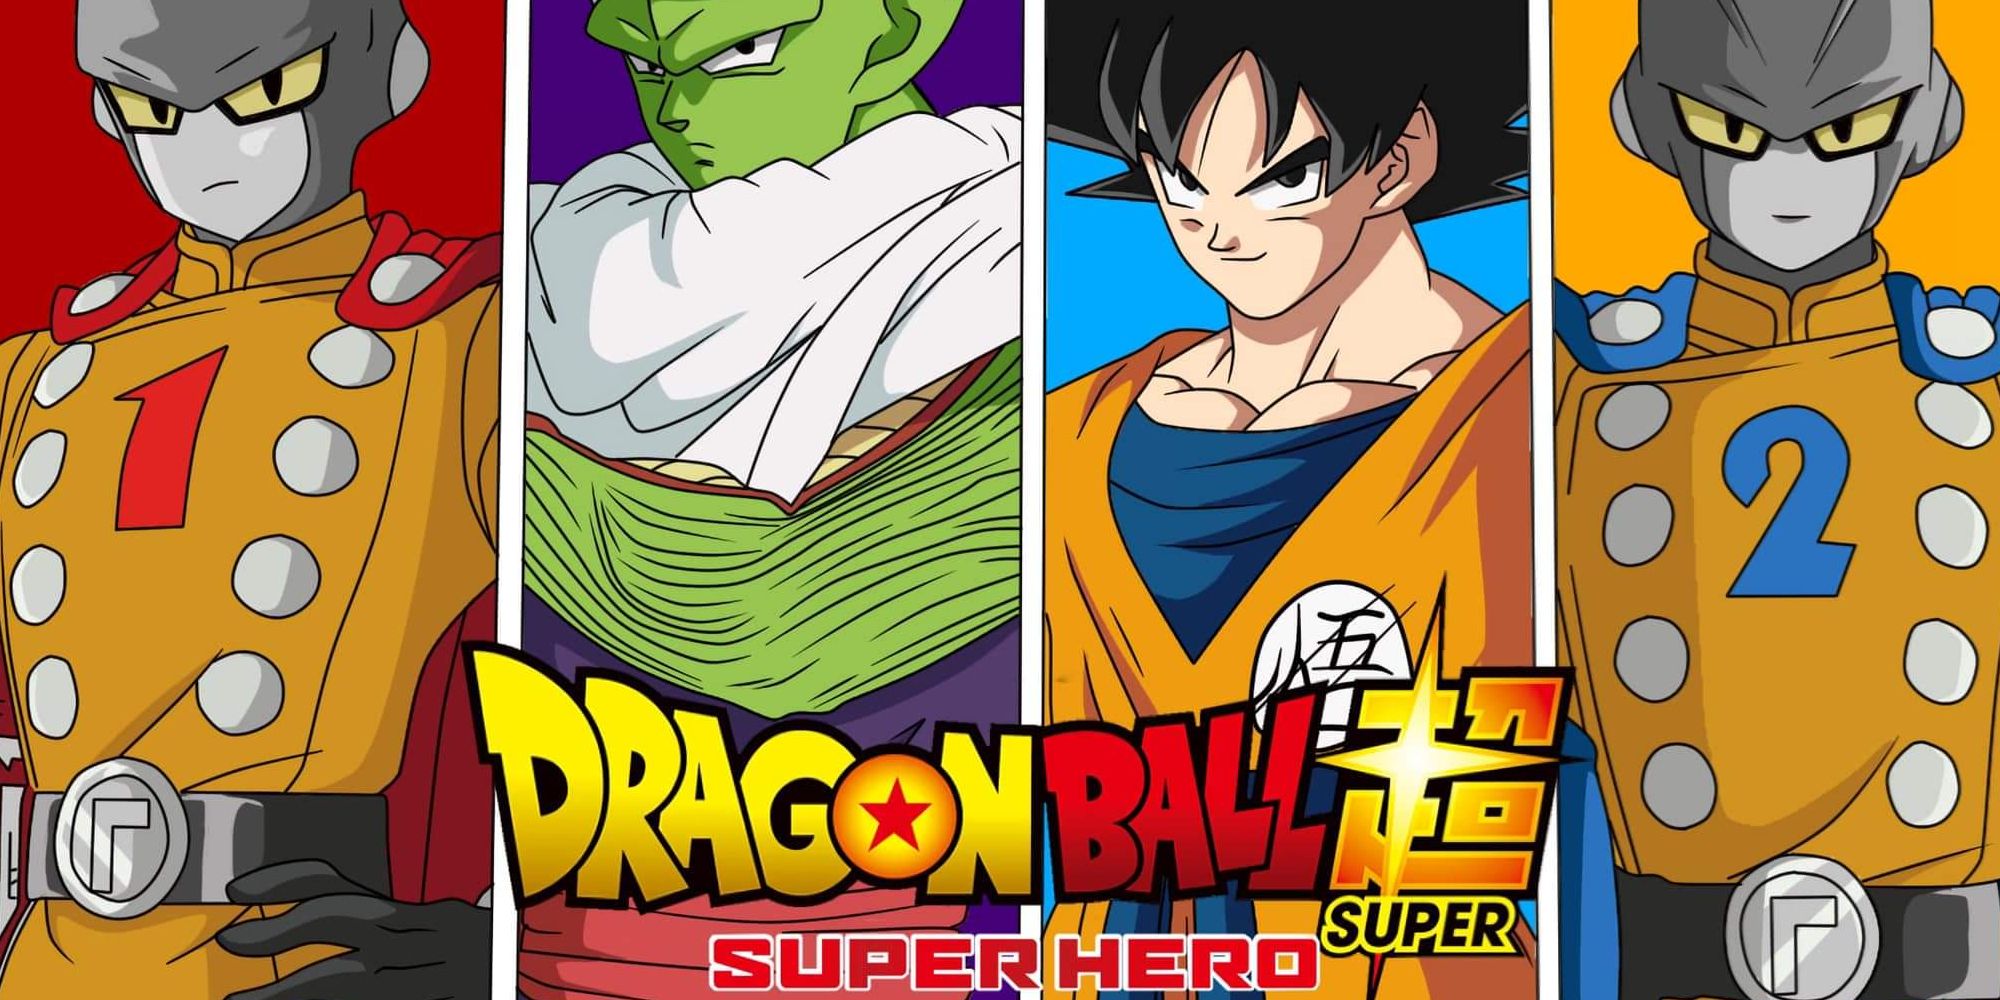 SUPER SAIYAN PAN!!! DRAGON BALL SUPER: SUPER HEROS BEST KEPT